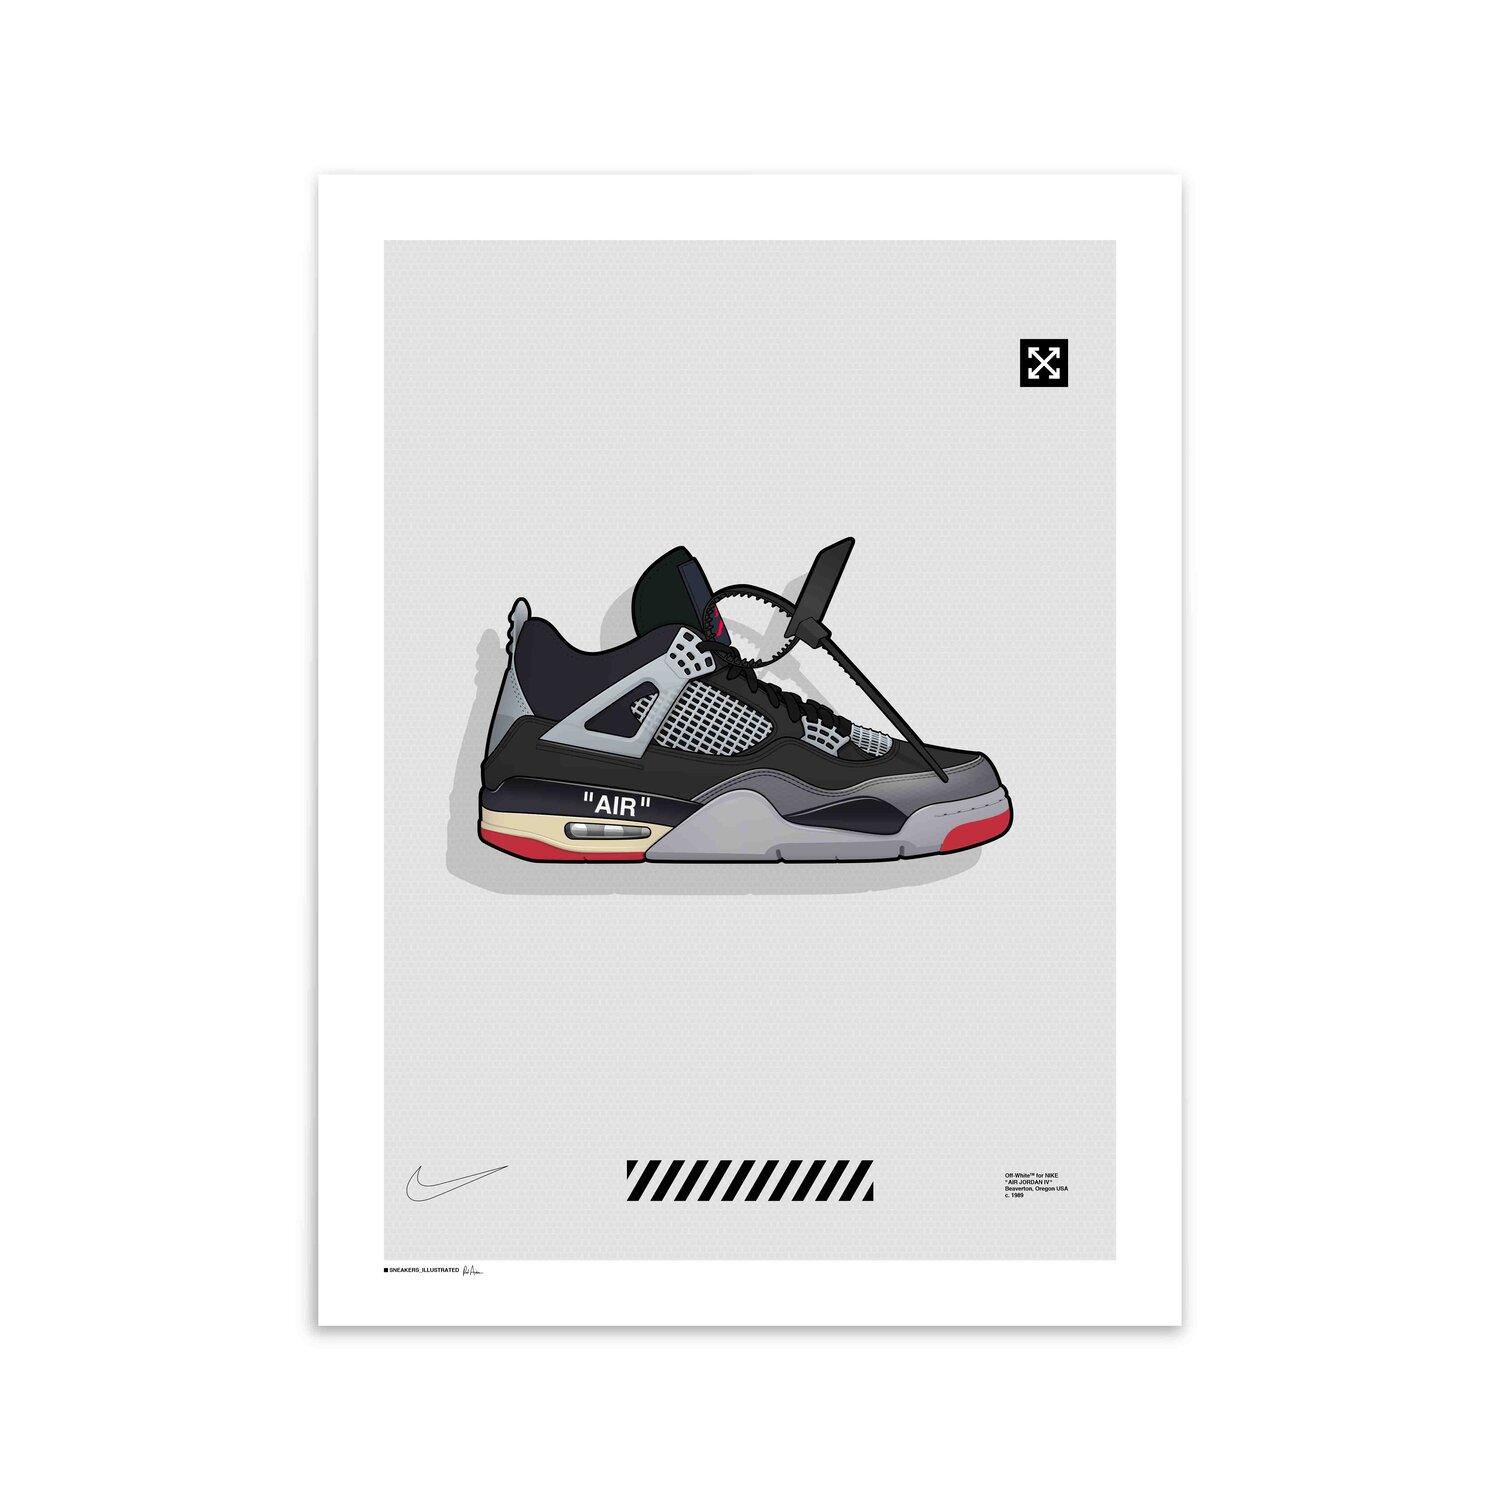 Off White X Nike Air Jordan Bred Poster Sneakers Illustrated